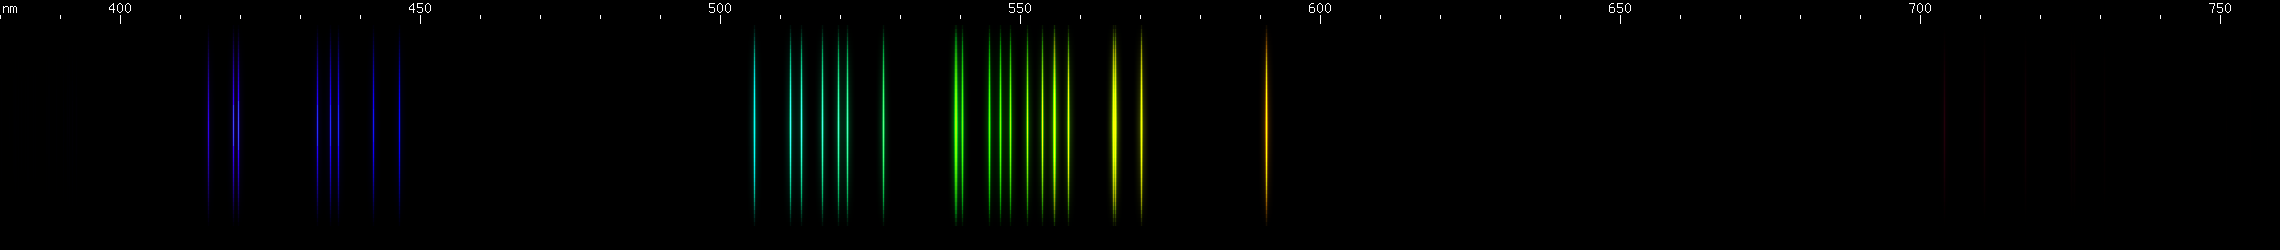 Spectral lines of Berkelium.